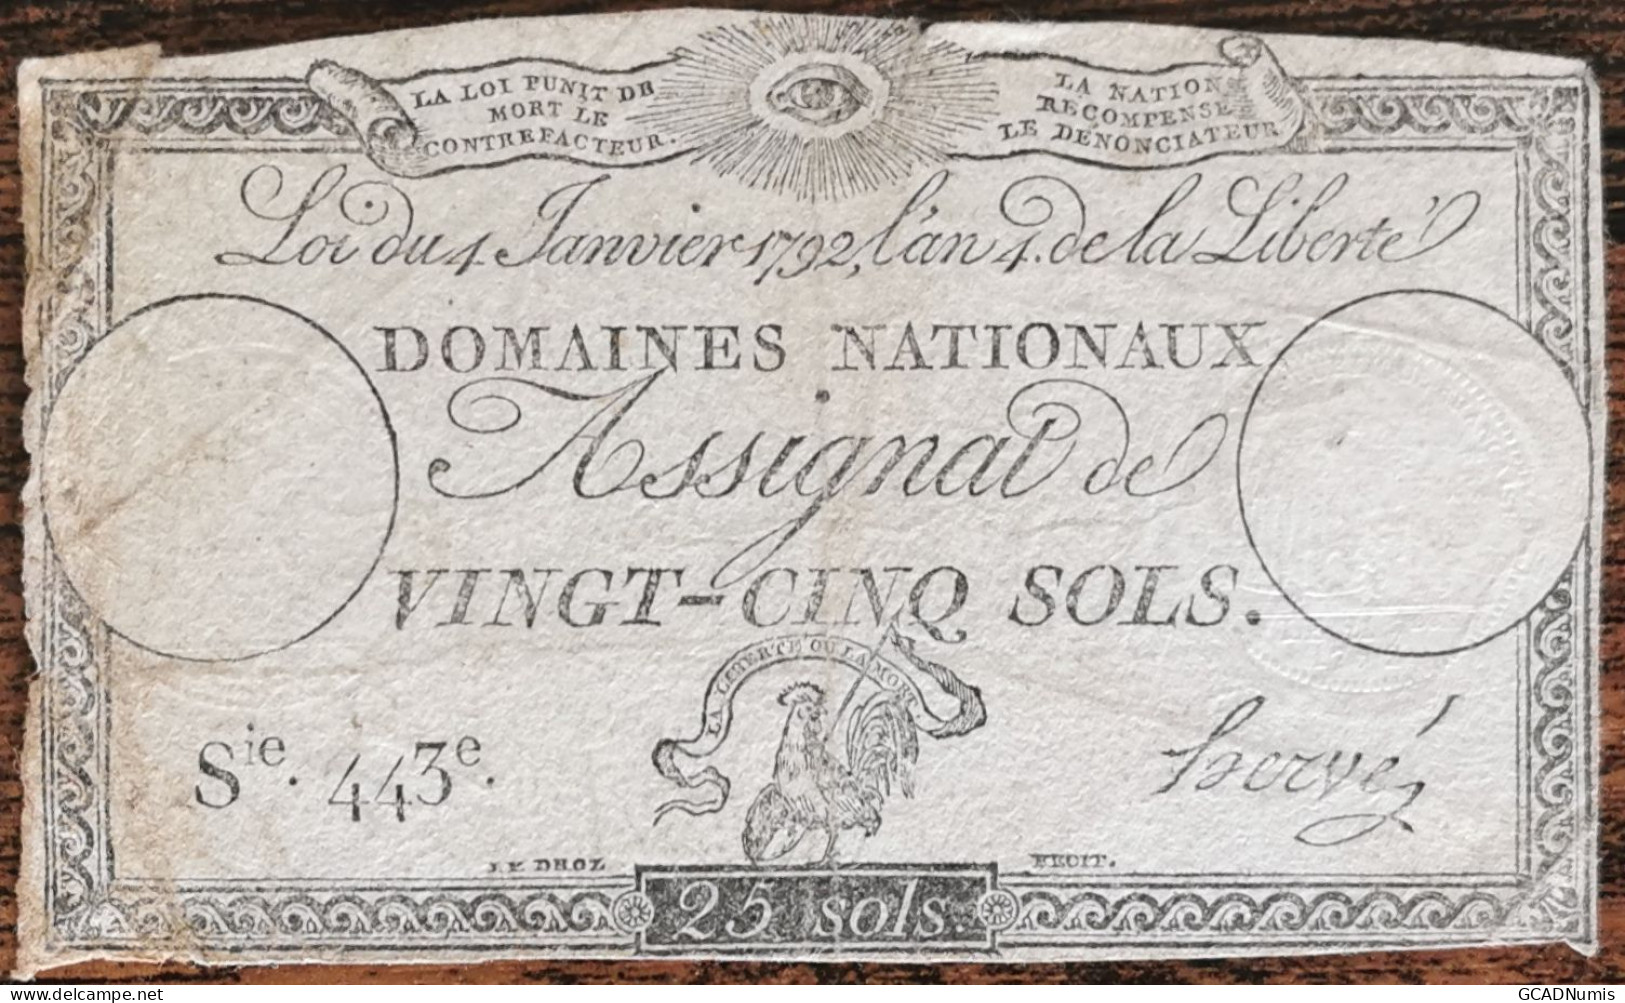 Assignat 25 Sols - 4 Janvier 1792 - Série 443 - Domaine Nationaux - Assignate